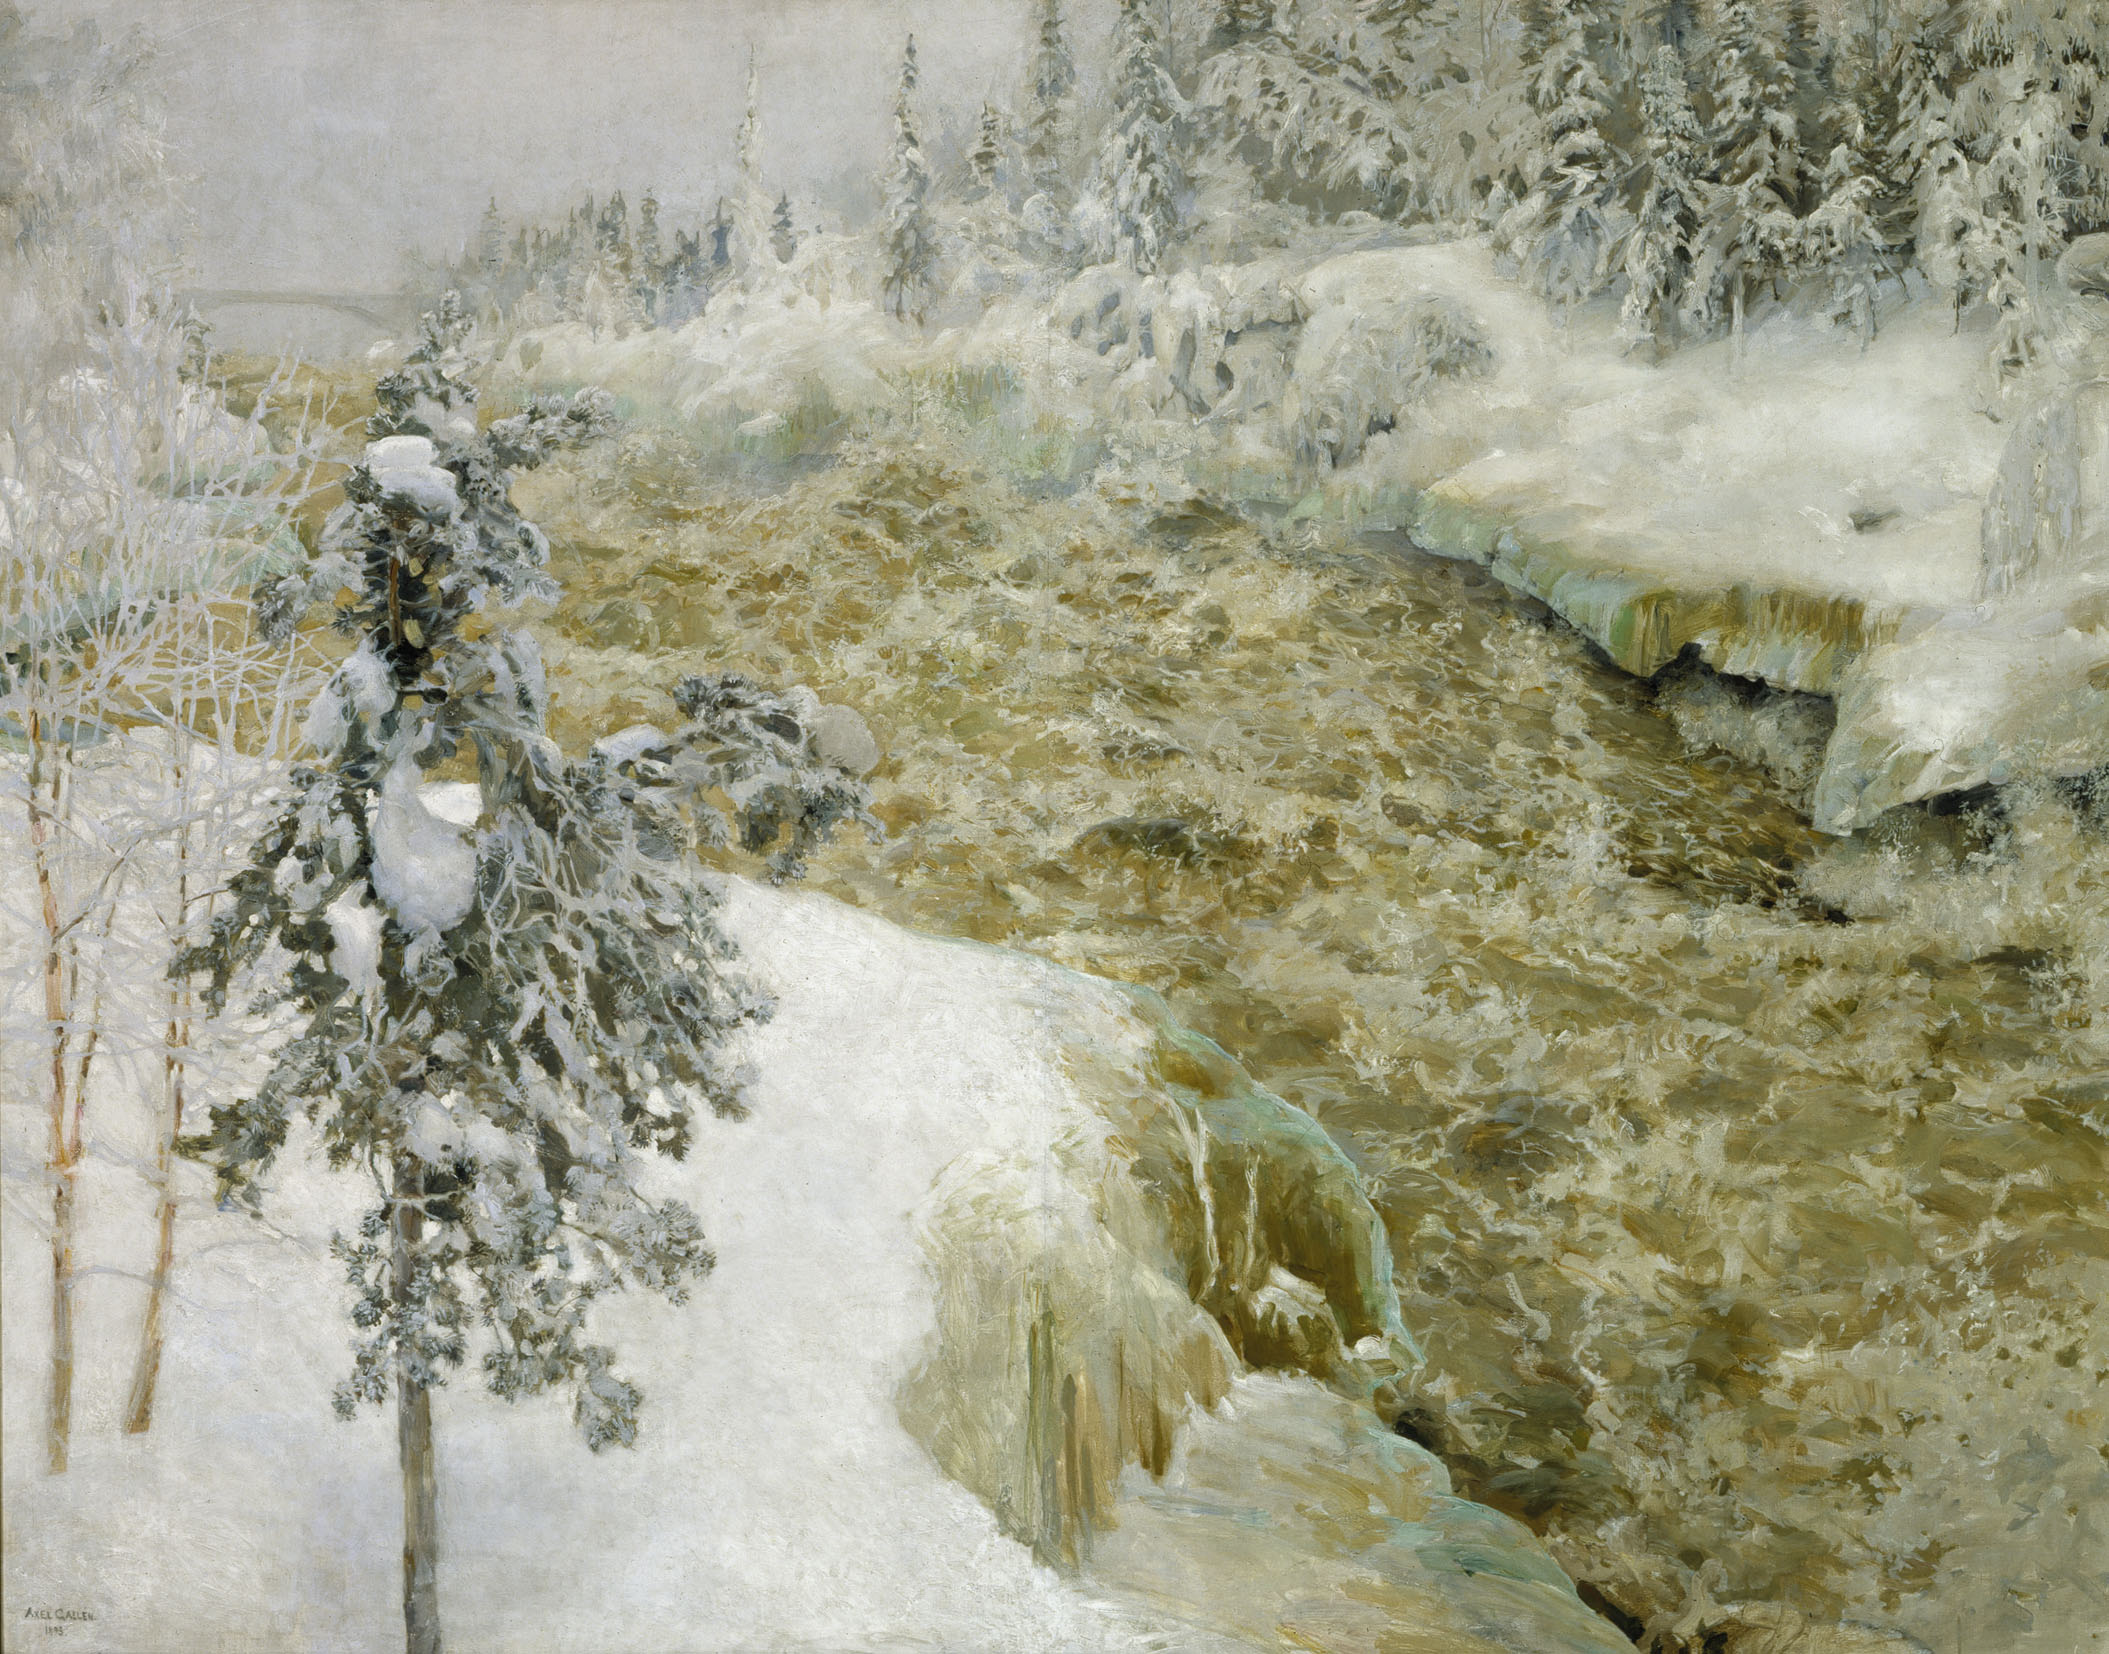 Imatra Falls in Snow by Akseli Gallen-Kallela - 1893 - 153 x 194 cm Europeana